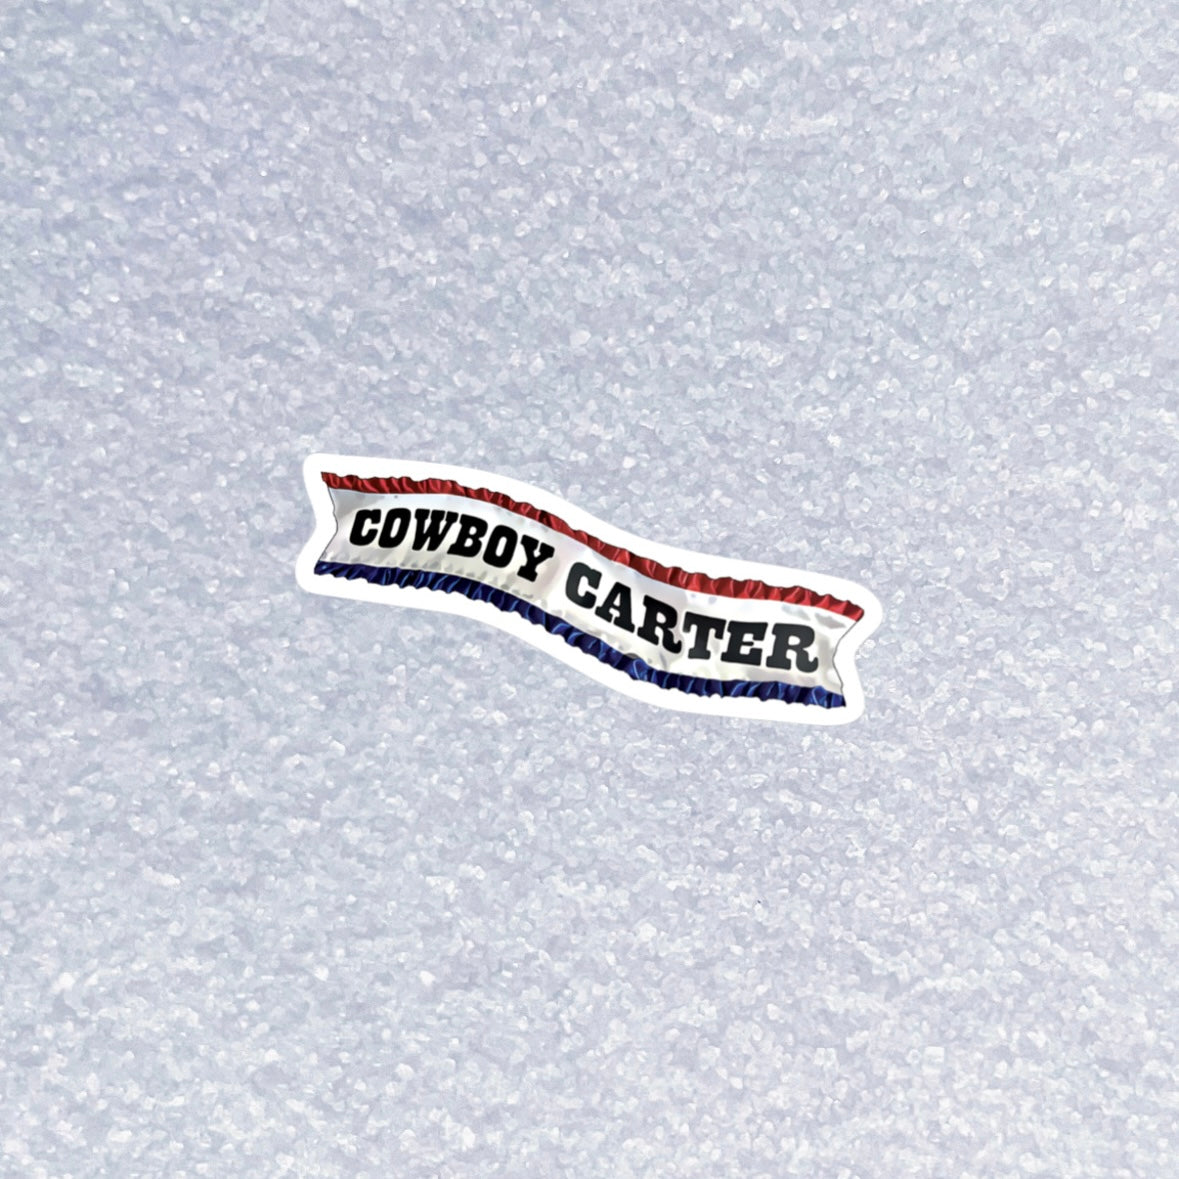 Cowboy Carter Sash - Sticker